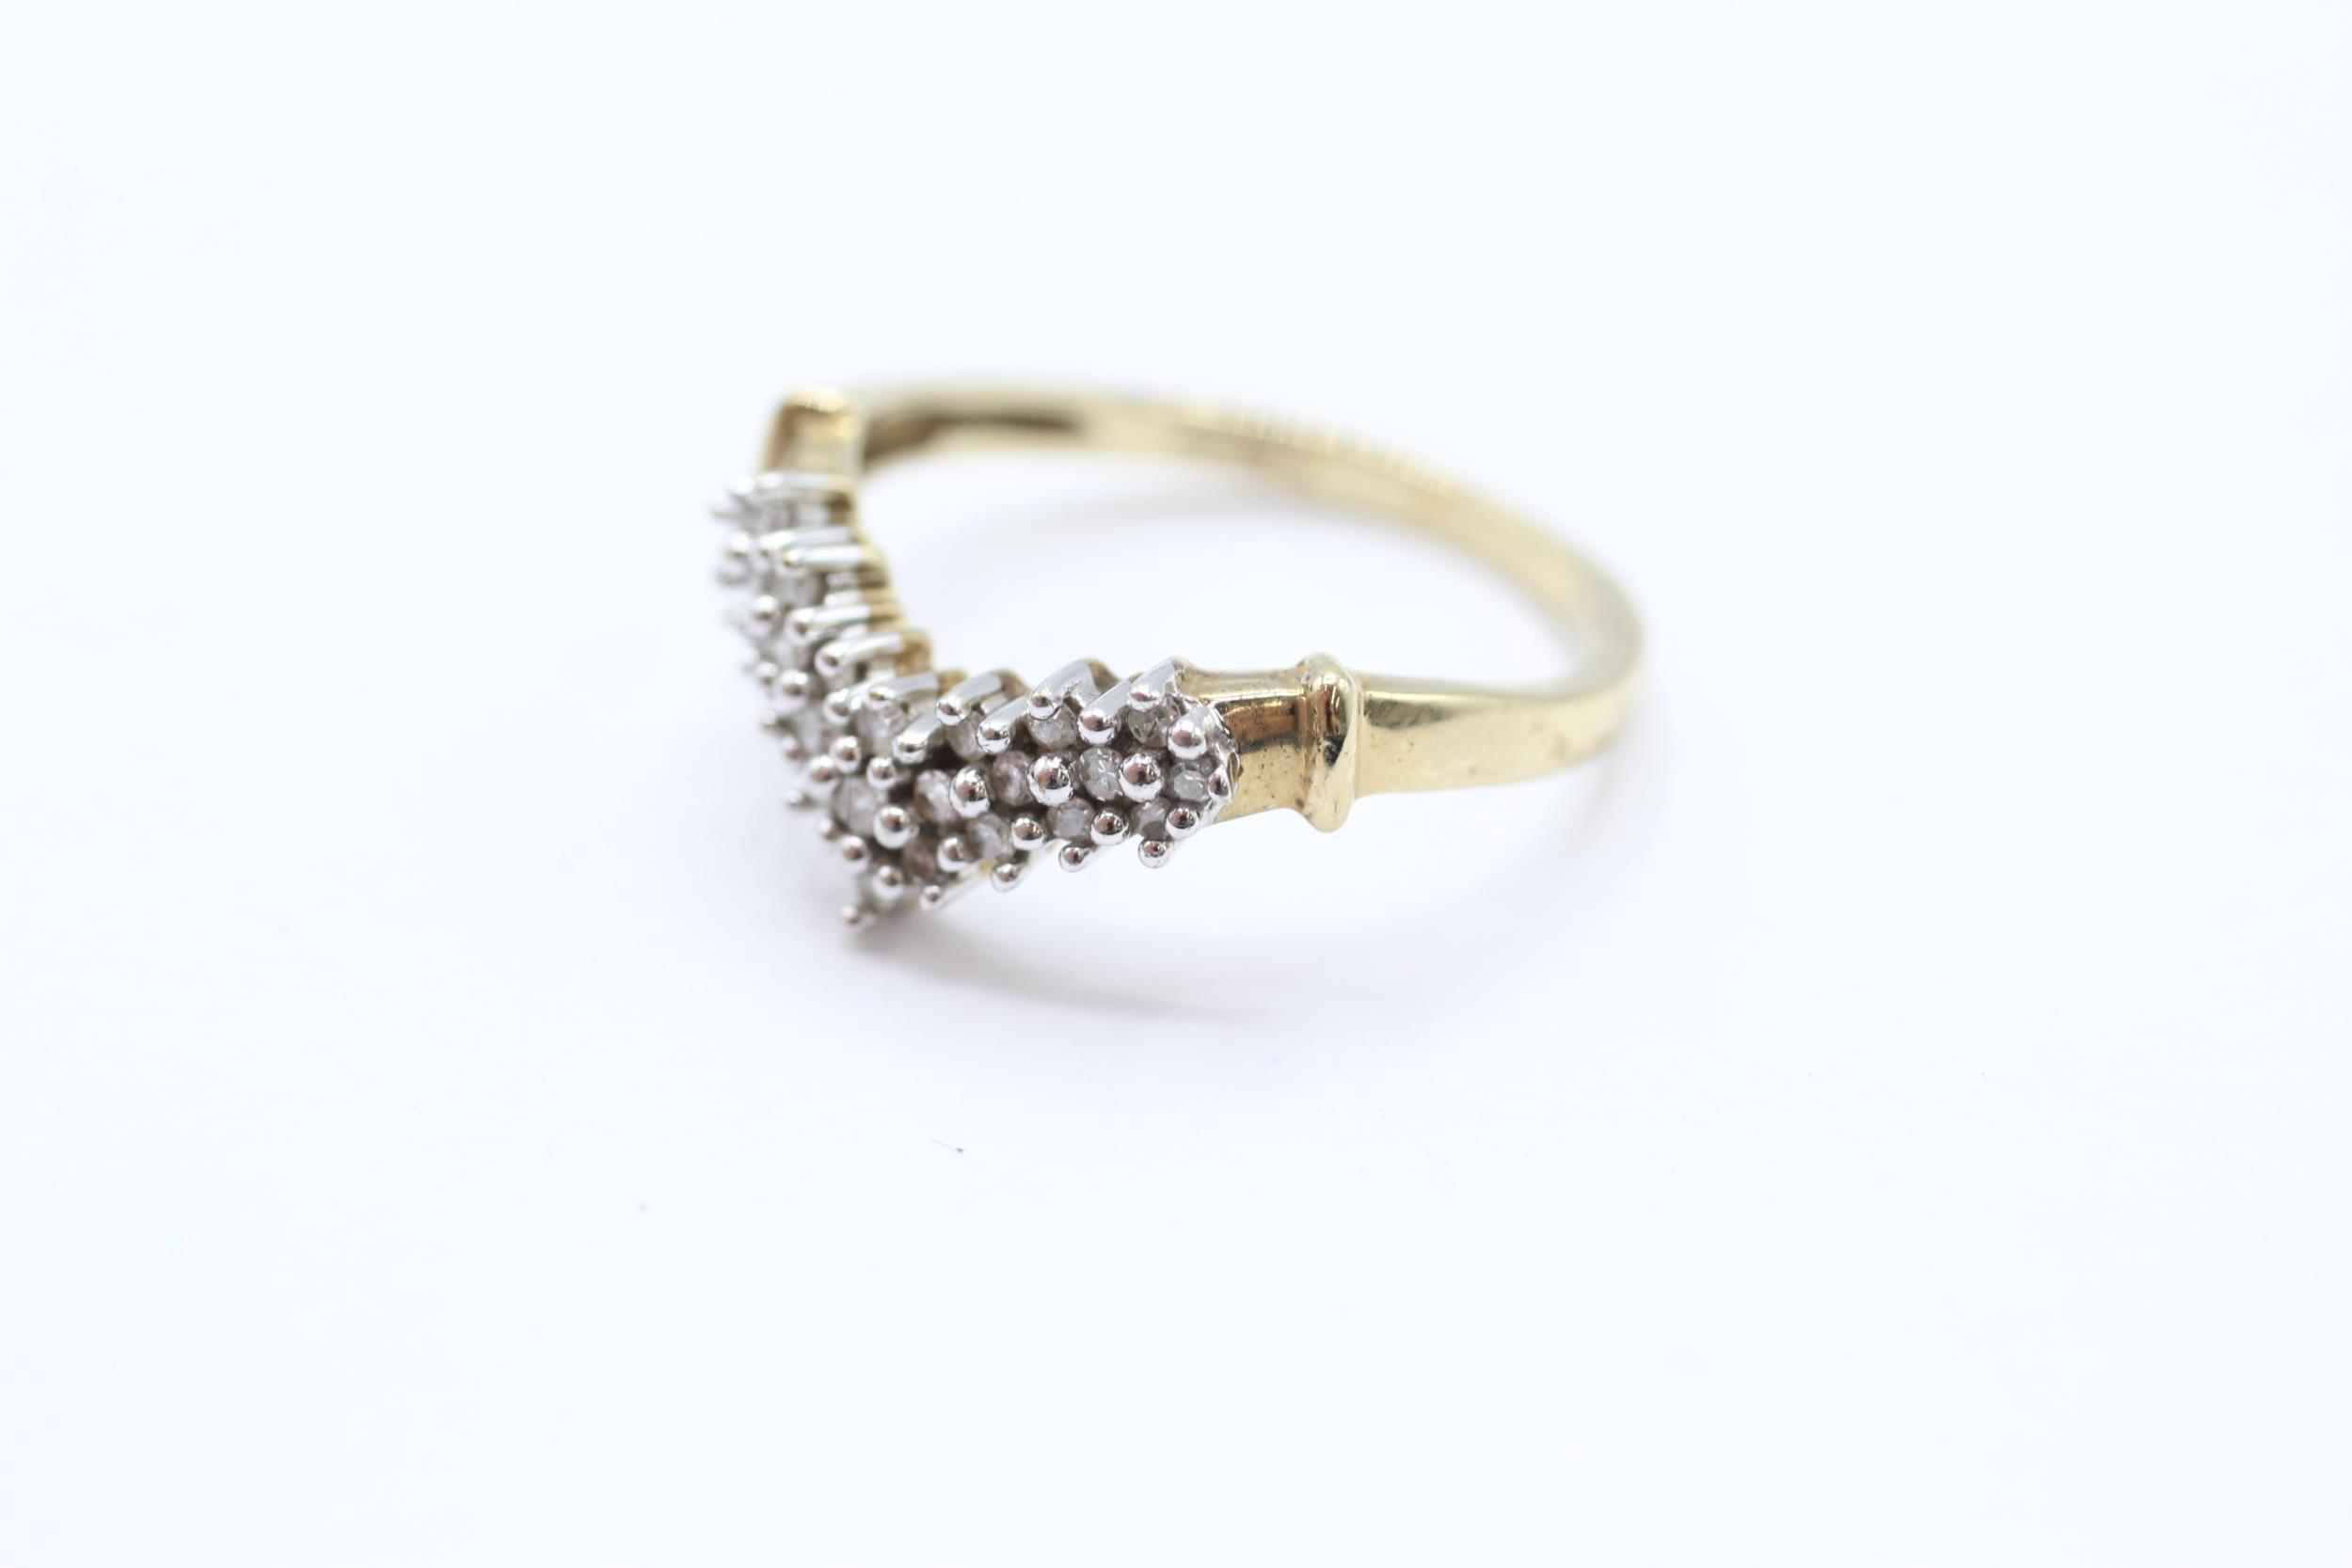 9ct gold pavé set diamond wishbone eternity ring Size M 1.8 g - Image 3 of 4